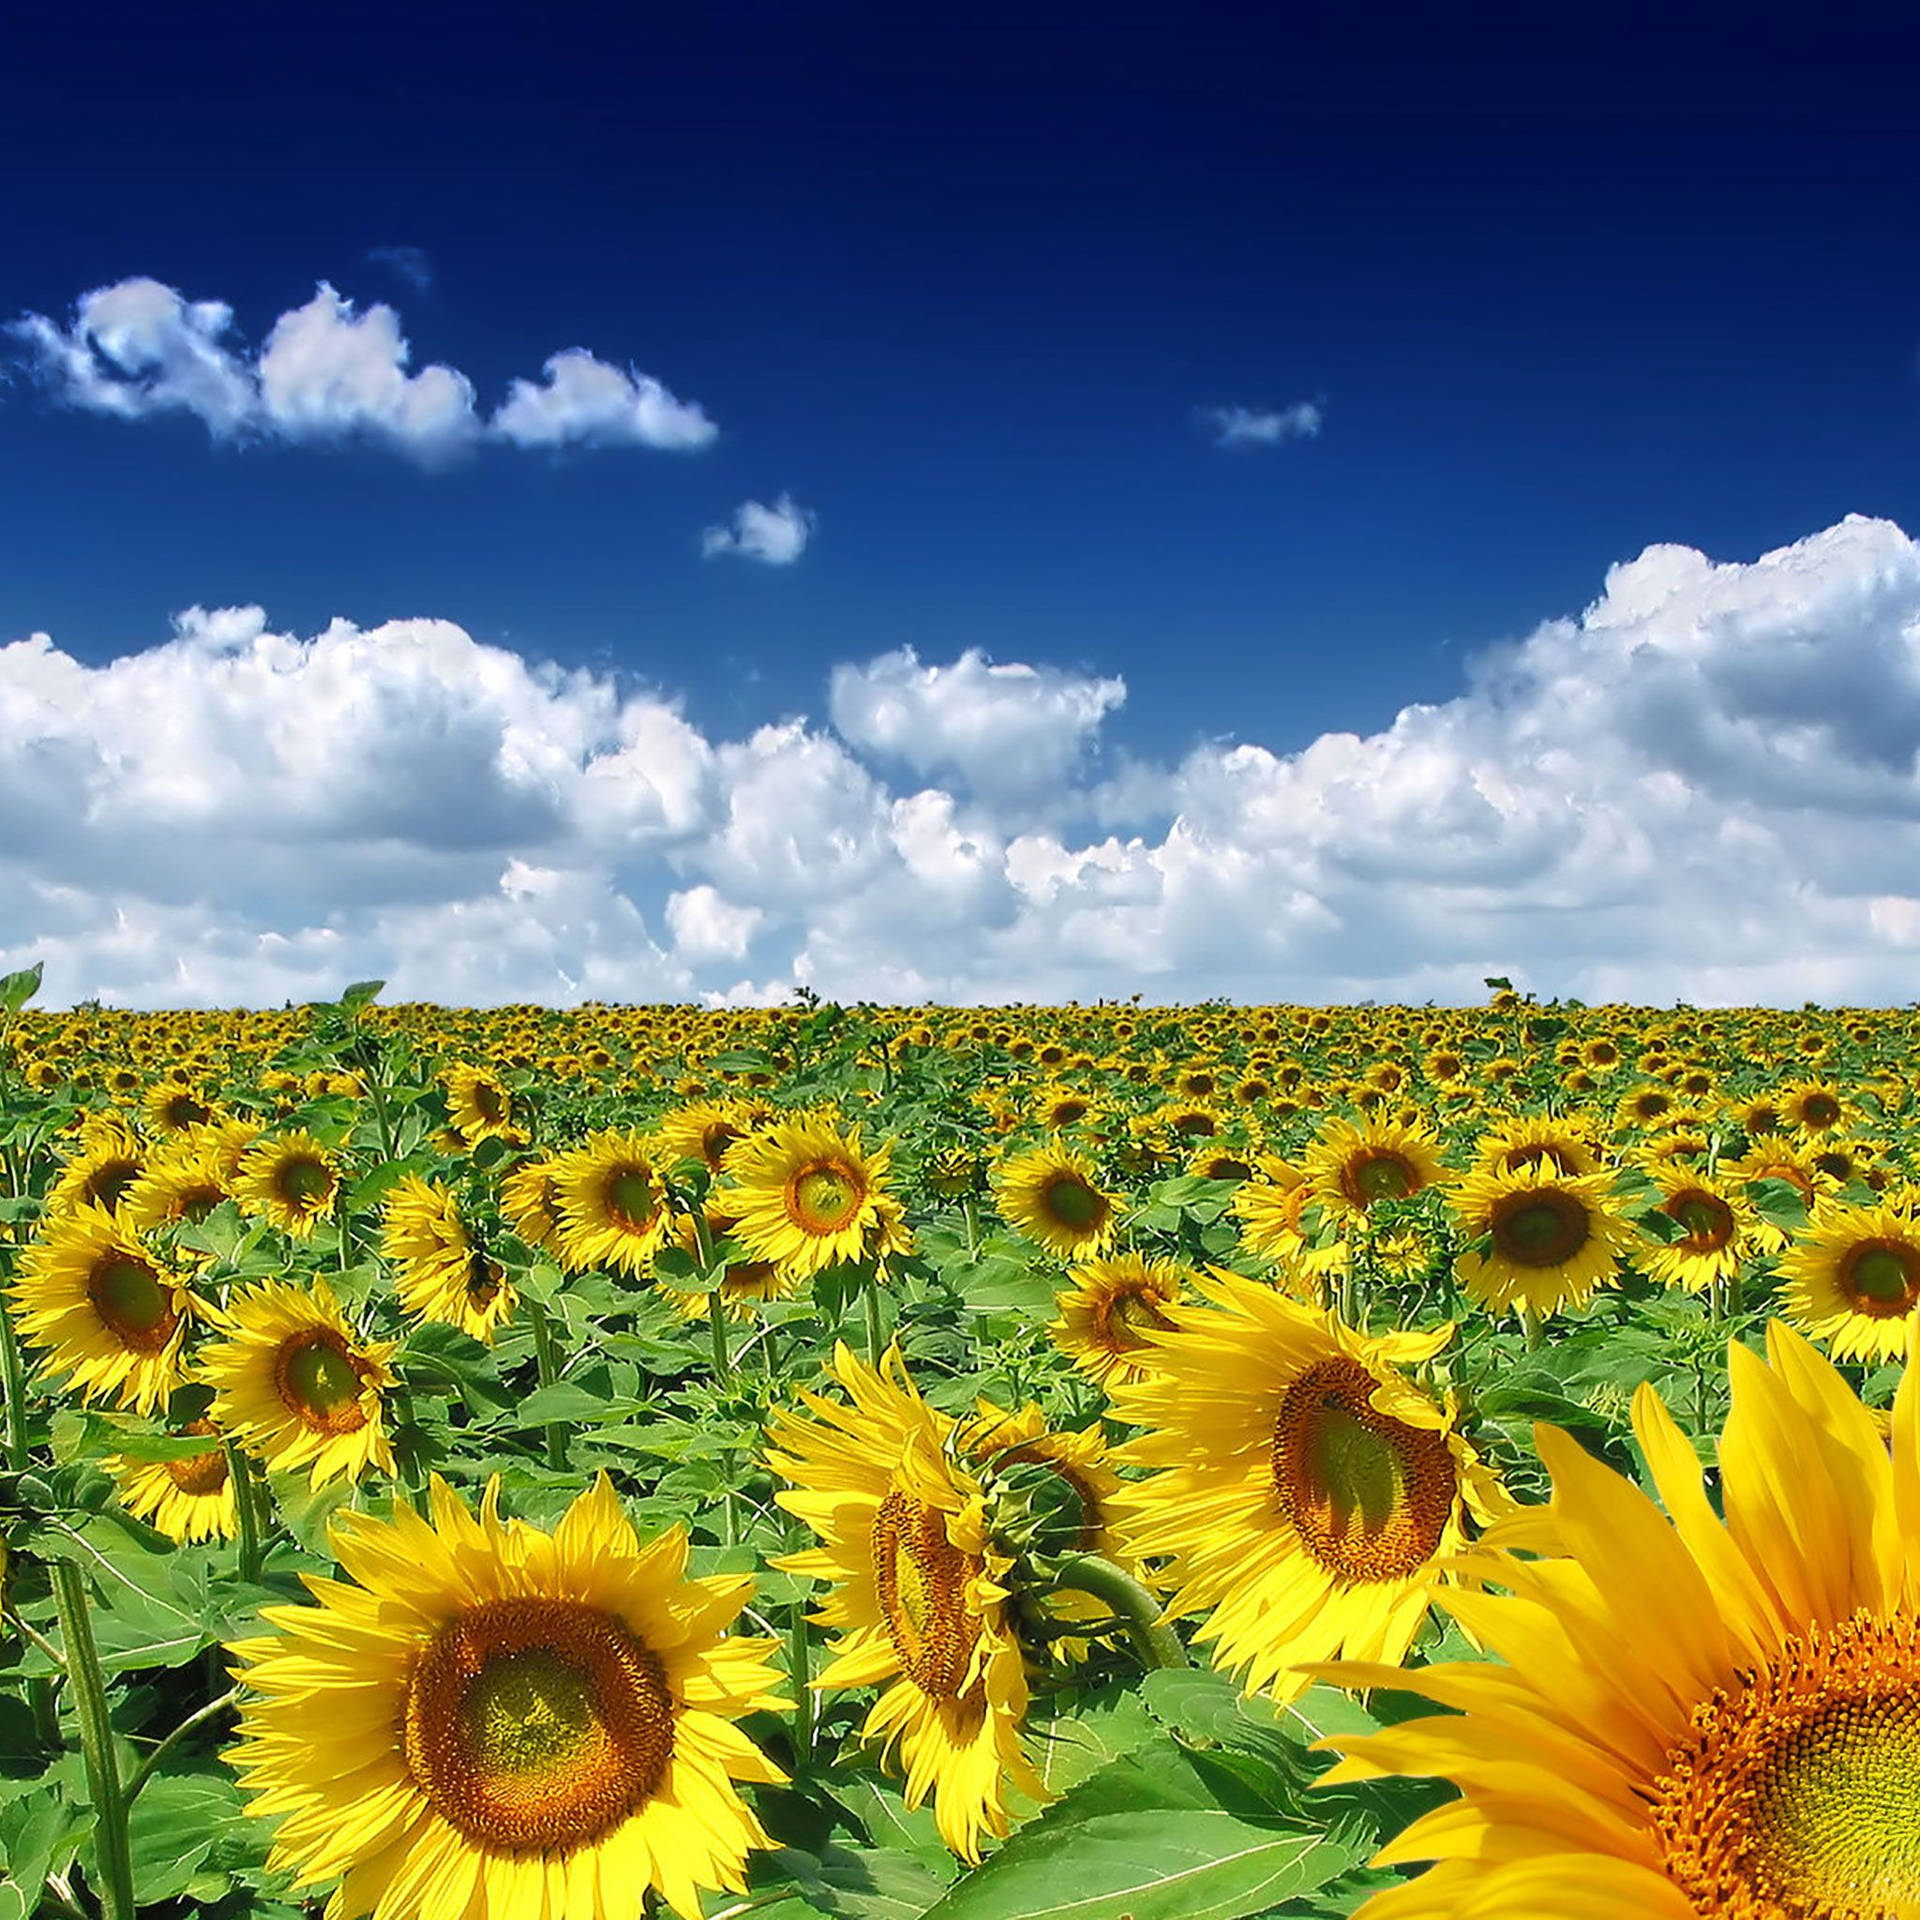 Sunflowers In A Field Under A Blue Sky Wallpaper